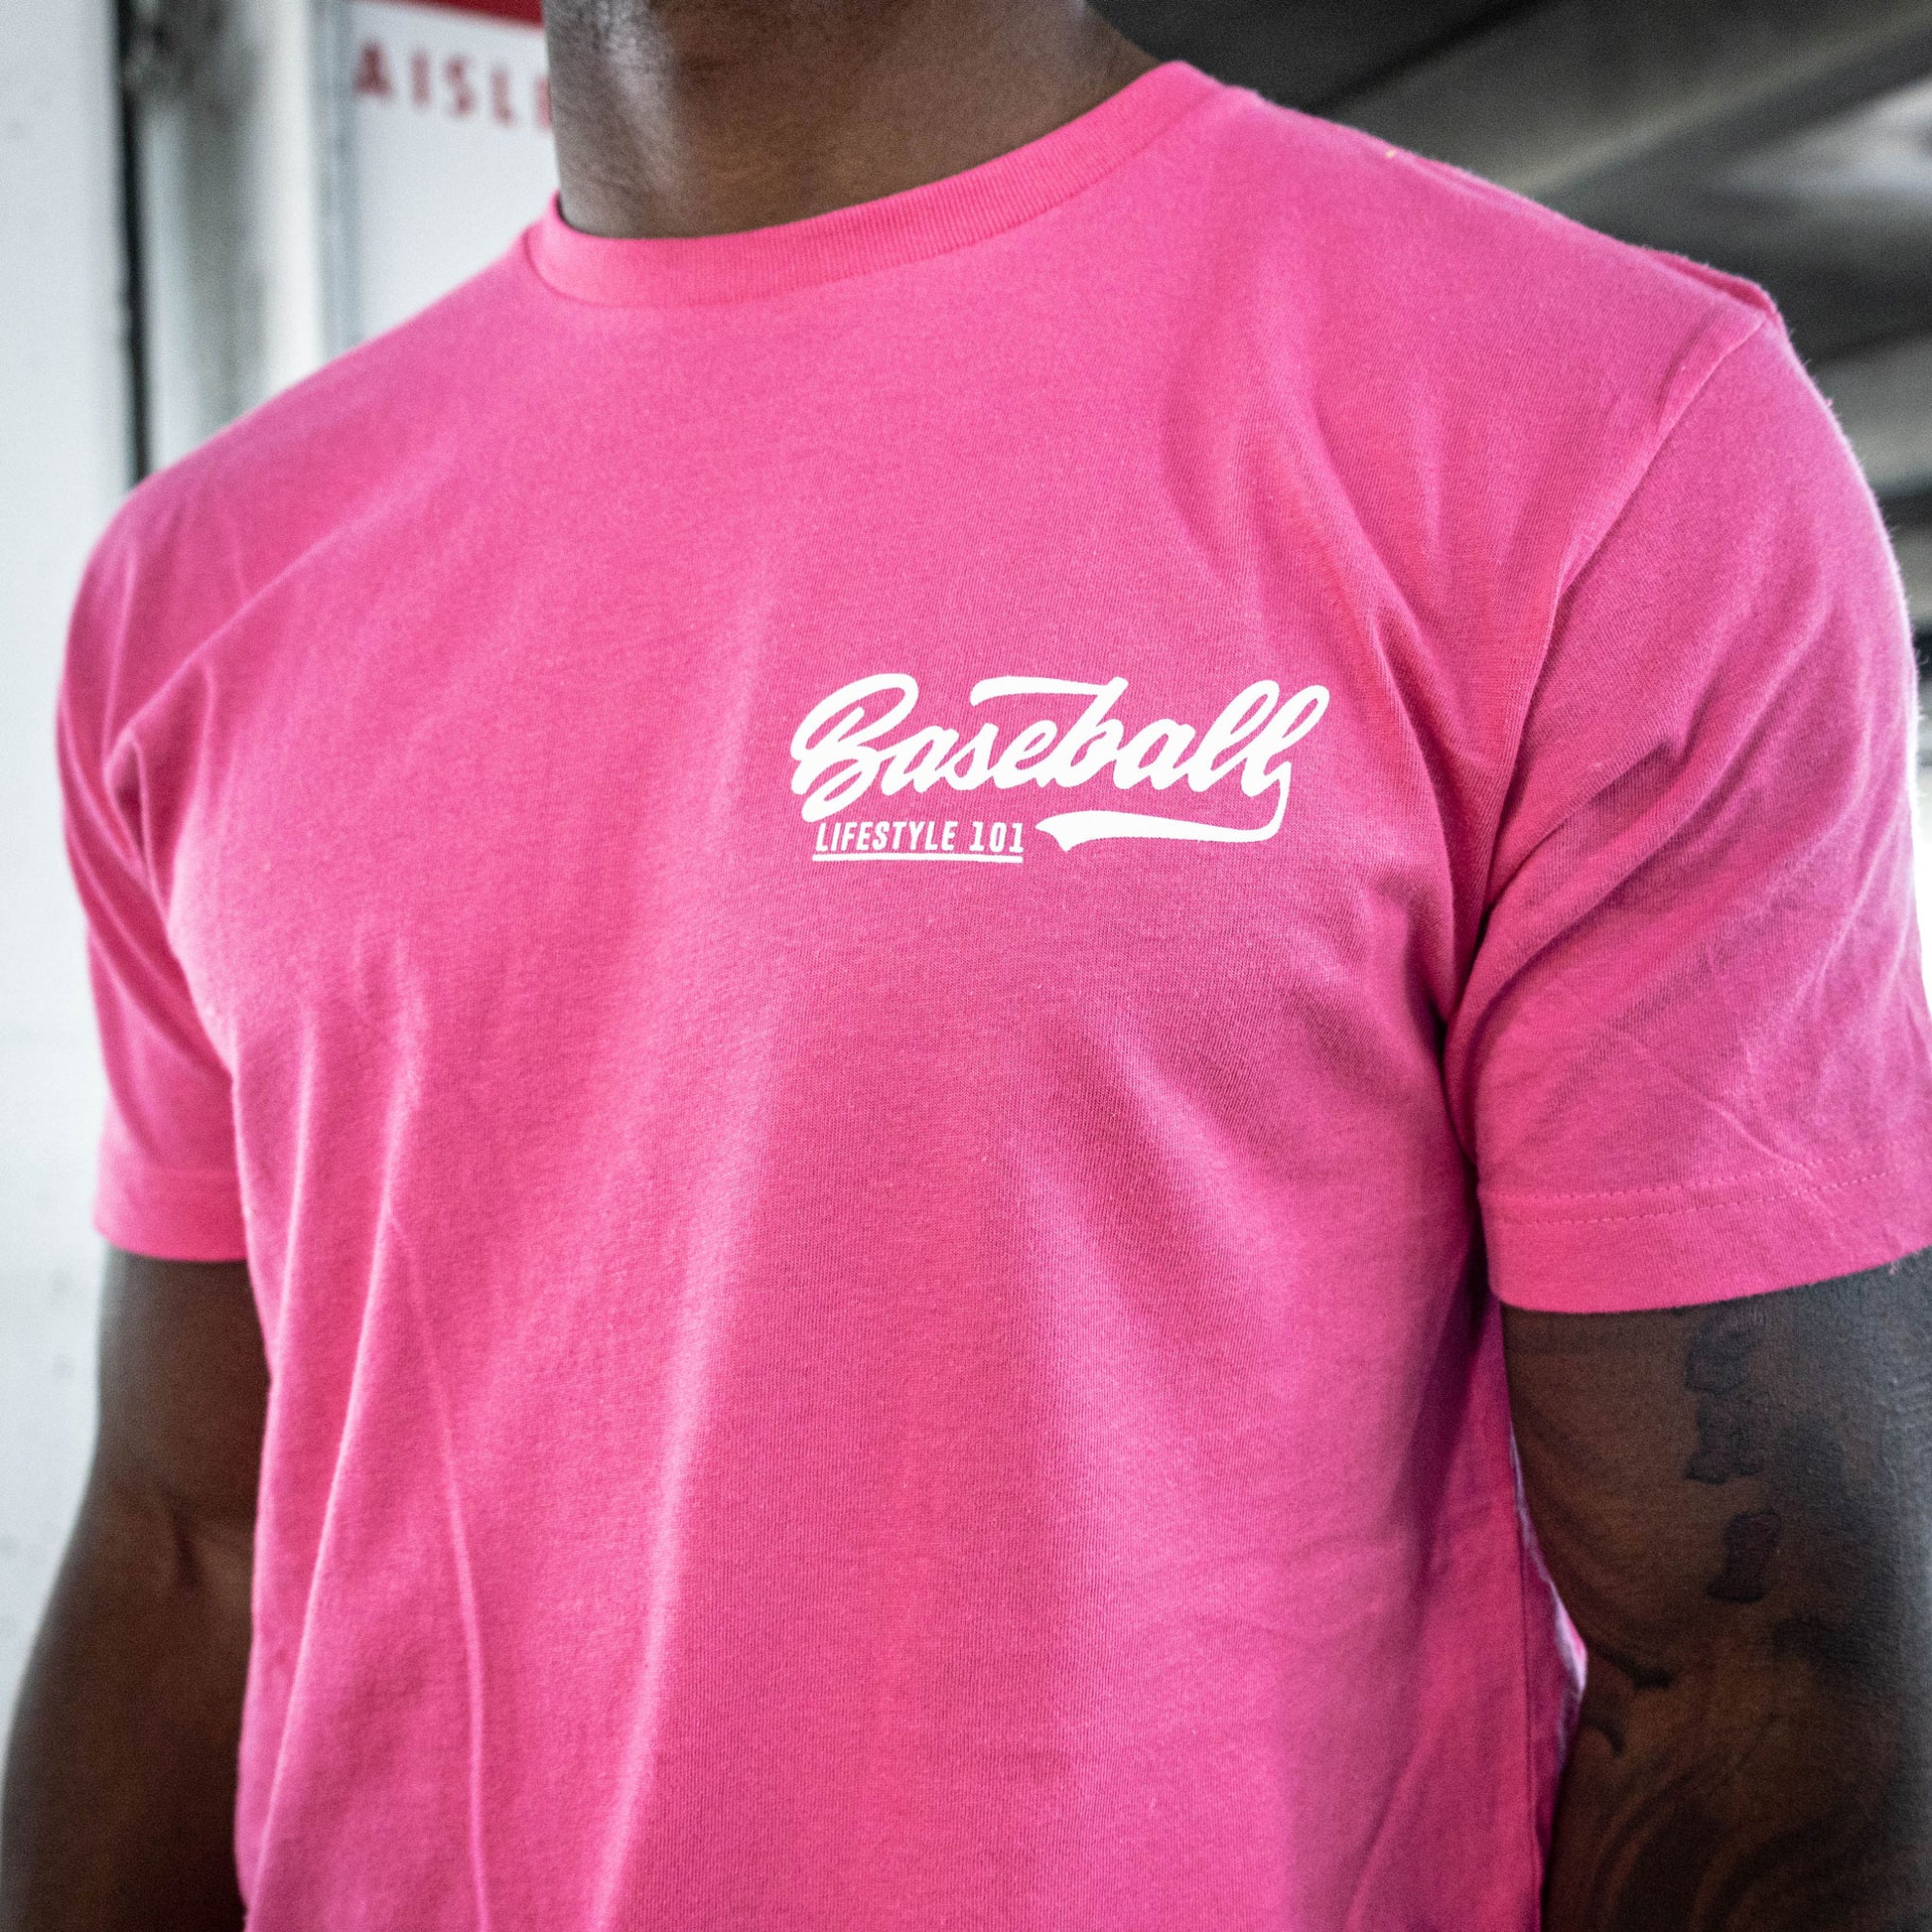 Established Tee - Pink/White – Baseball Lifestyle 101